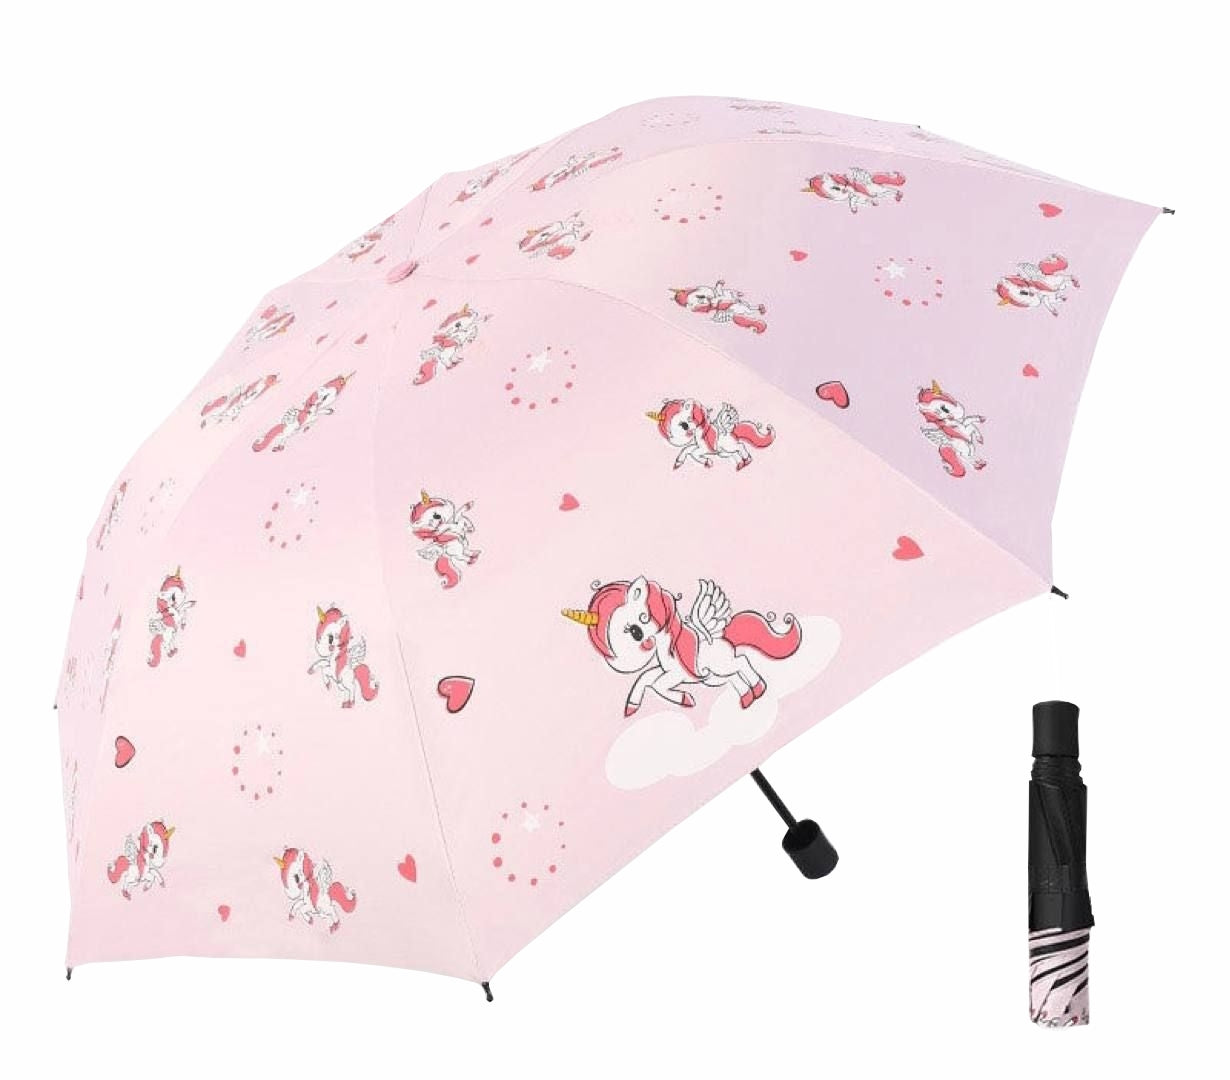 Unicorn Theme Umbrella